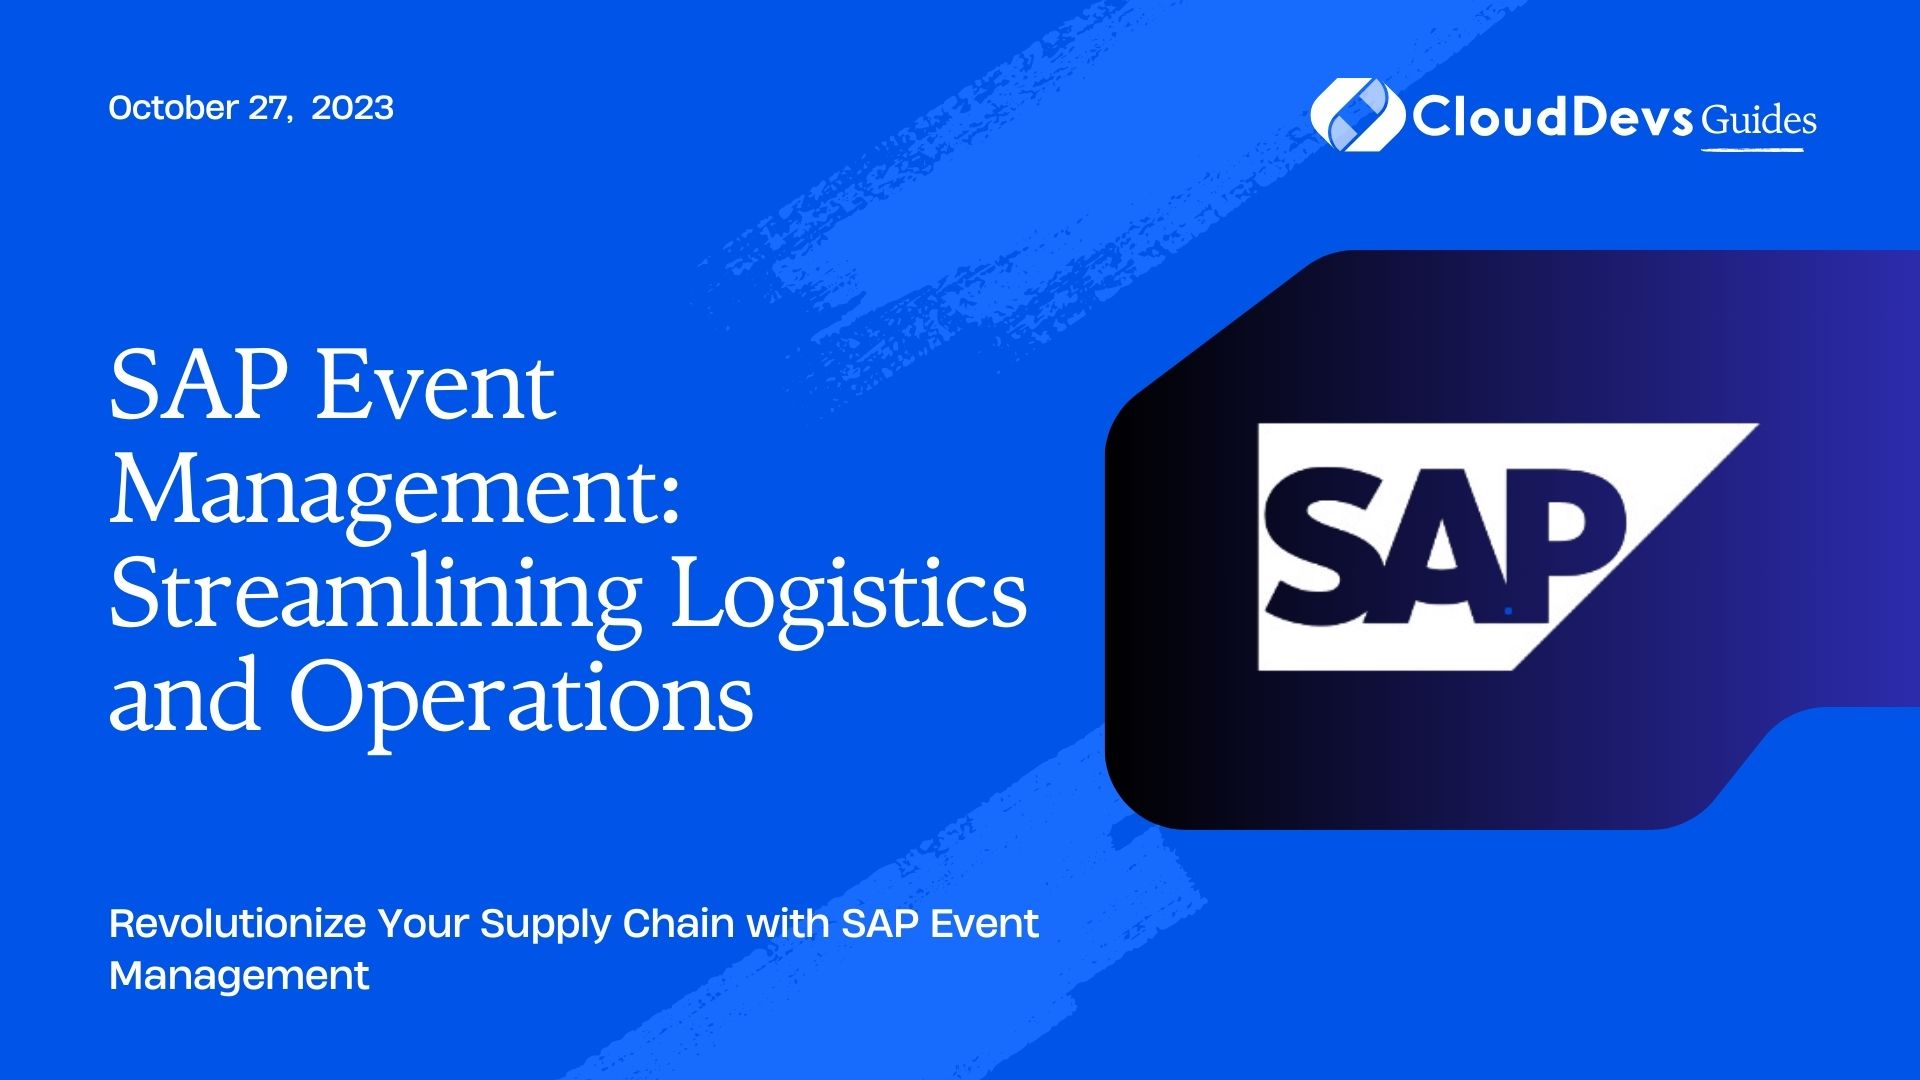 SAP Event Management: Streamlining Logistics and Operations